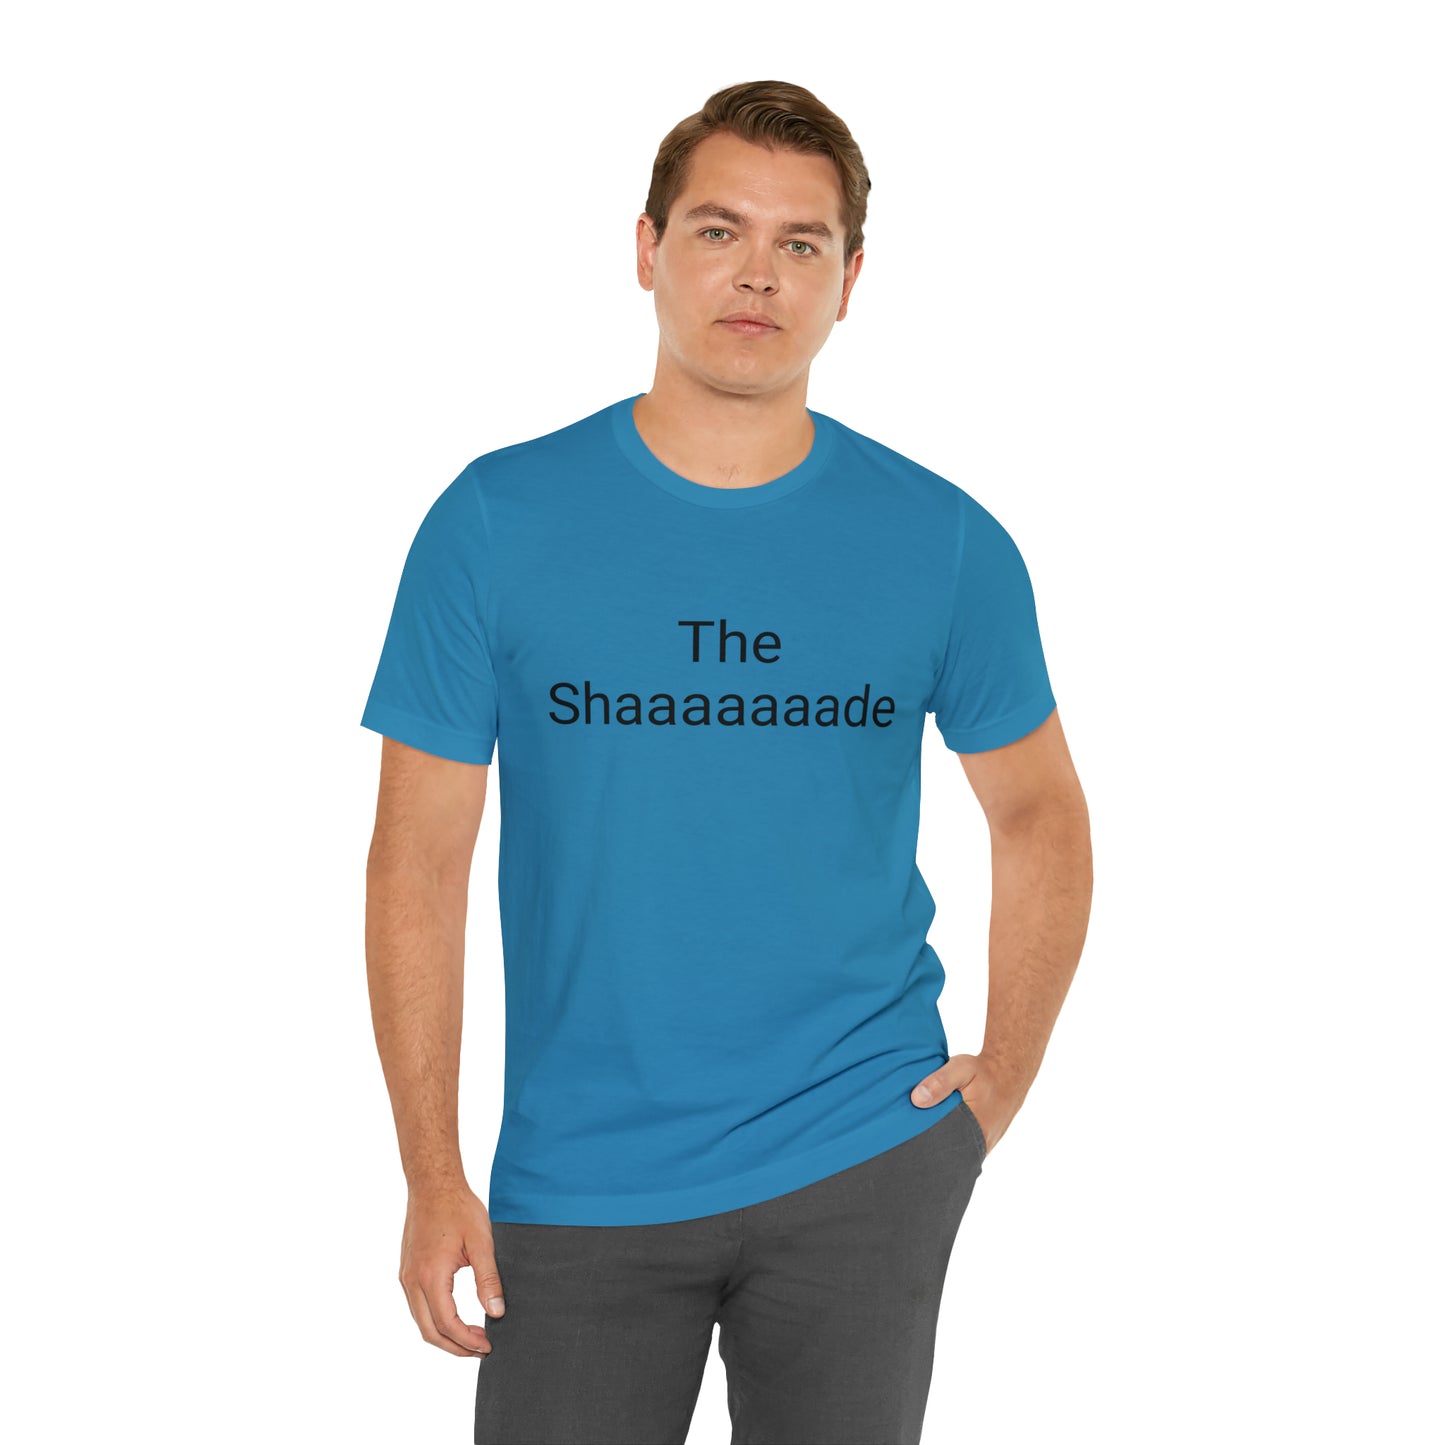 “The Shaaaaade” Unisex Jersey Short Sleeve Tee